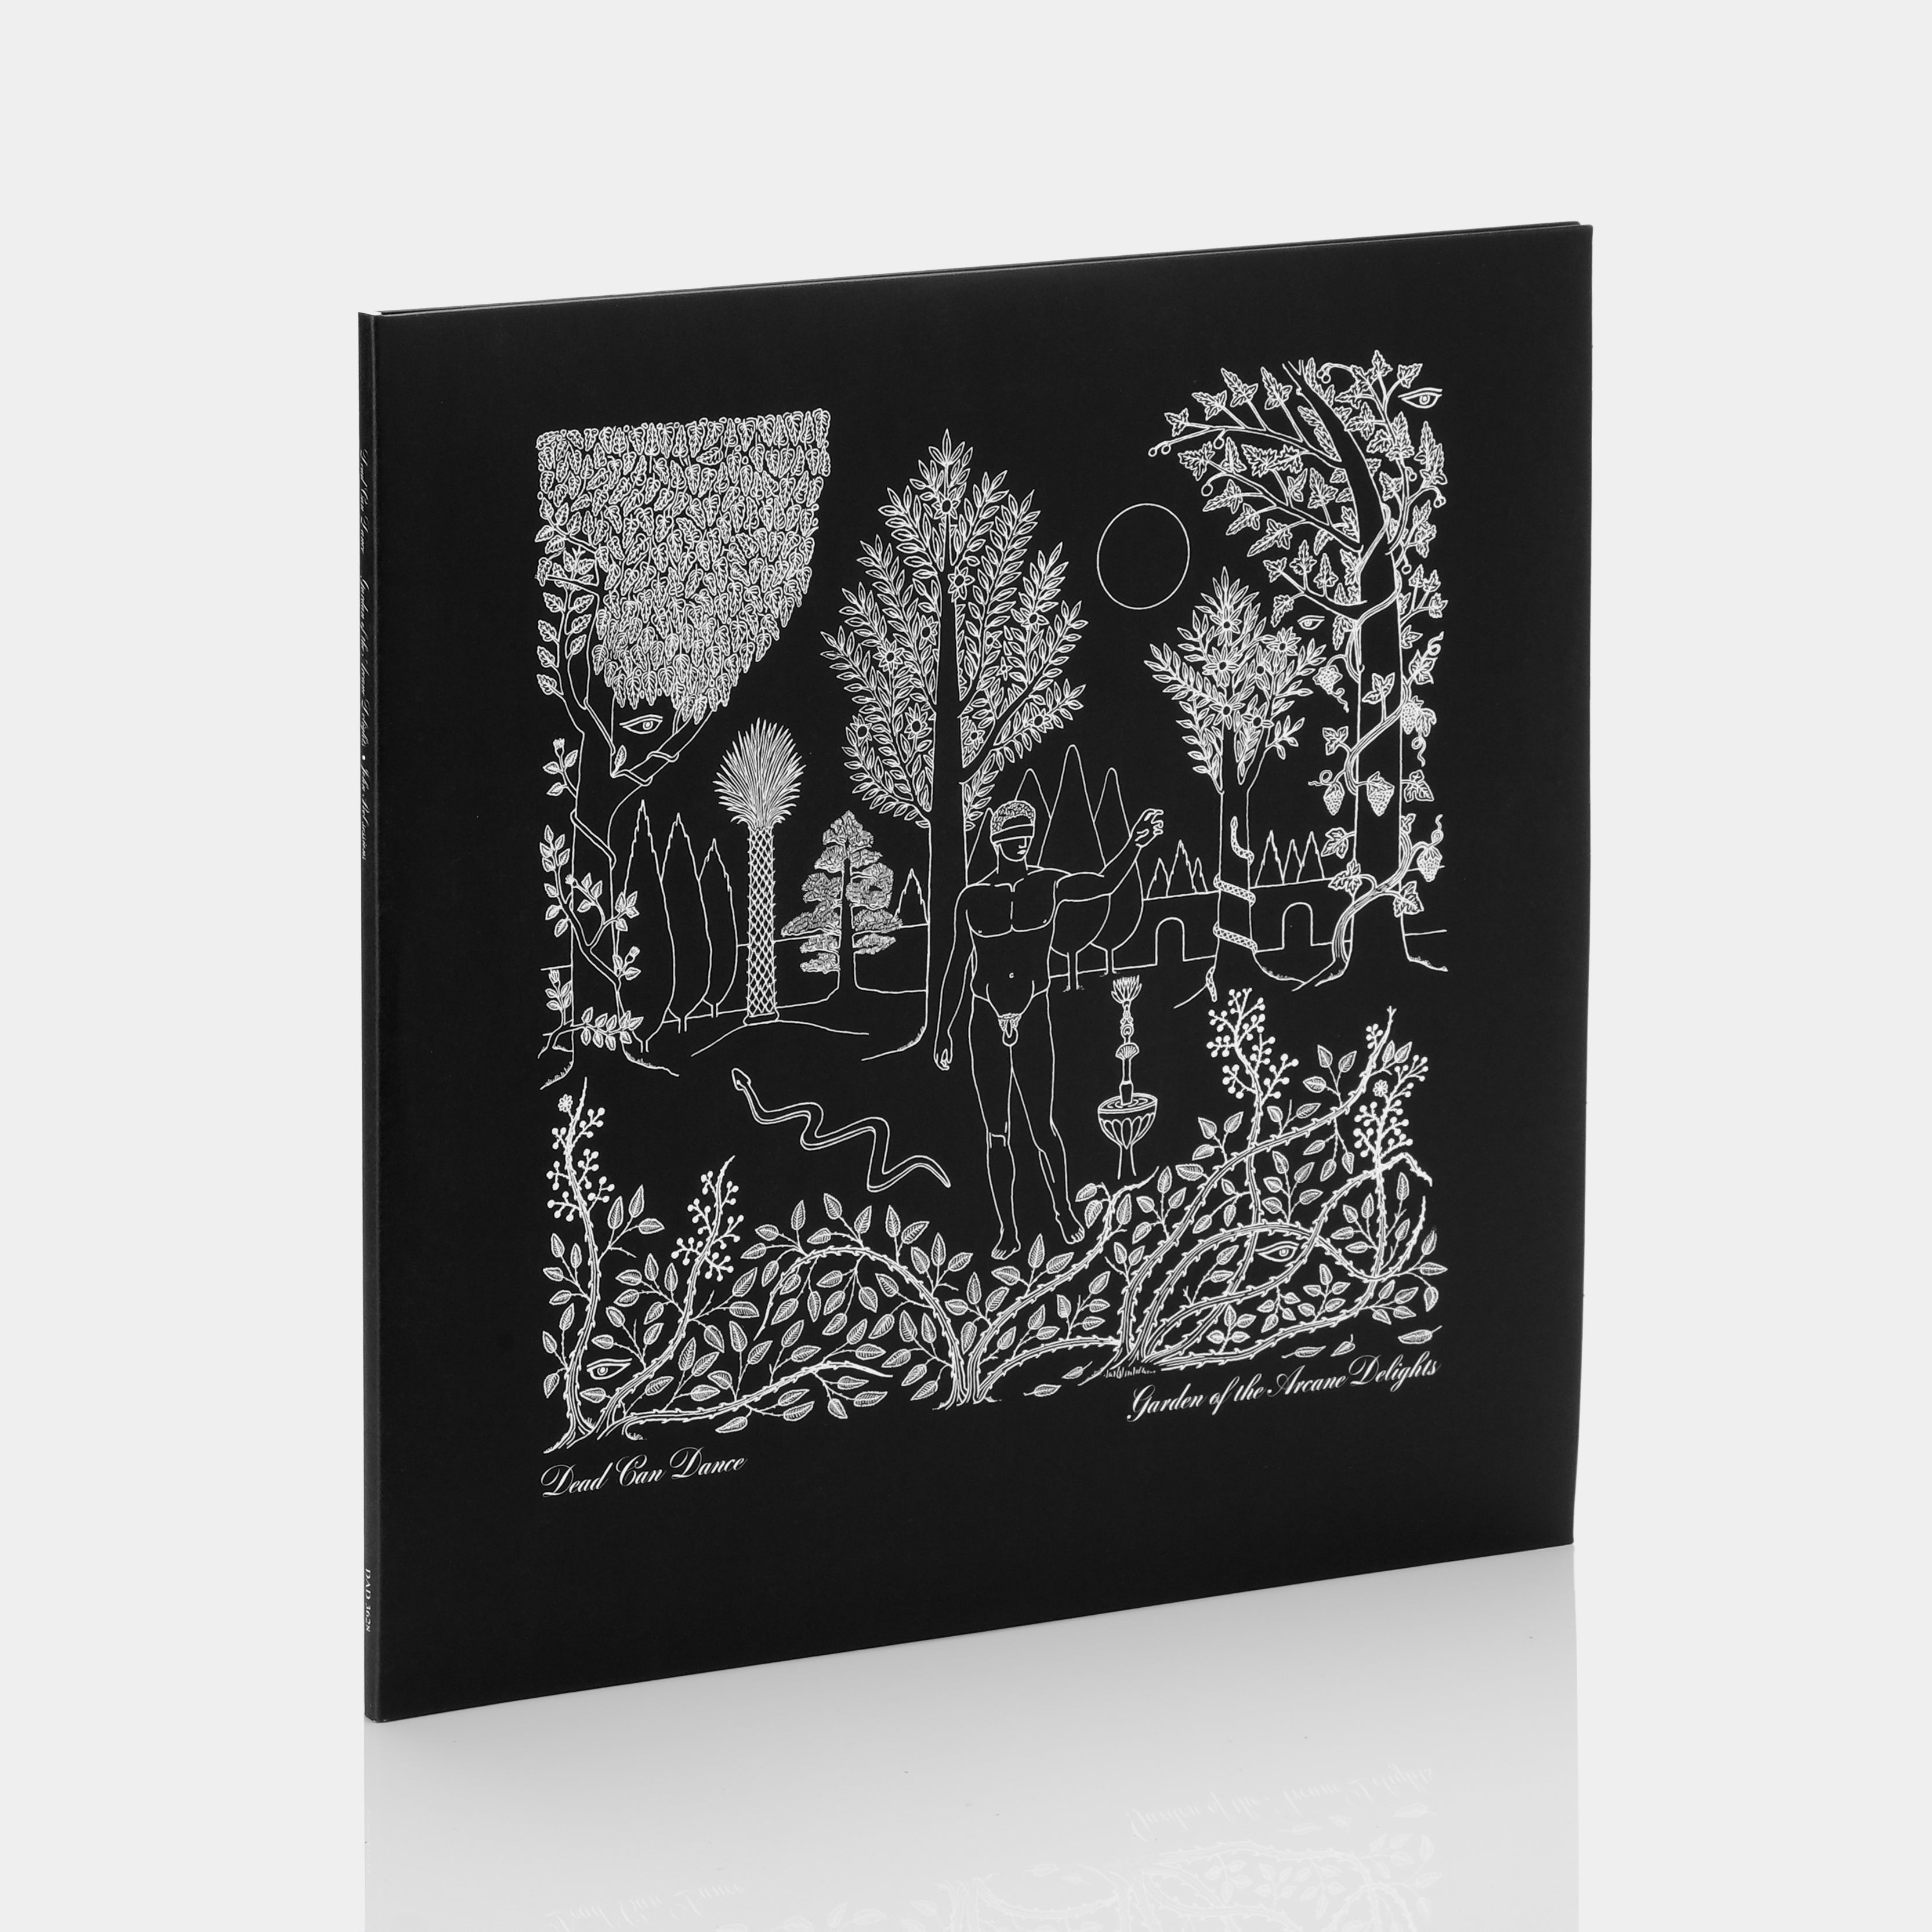 Dead Can Dance - Garden Of The Arcane Delights + Peel Sessions 2xLP Vinyl Record